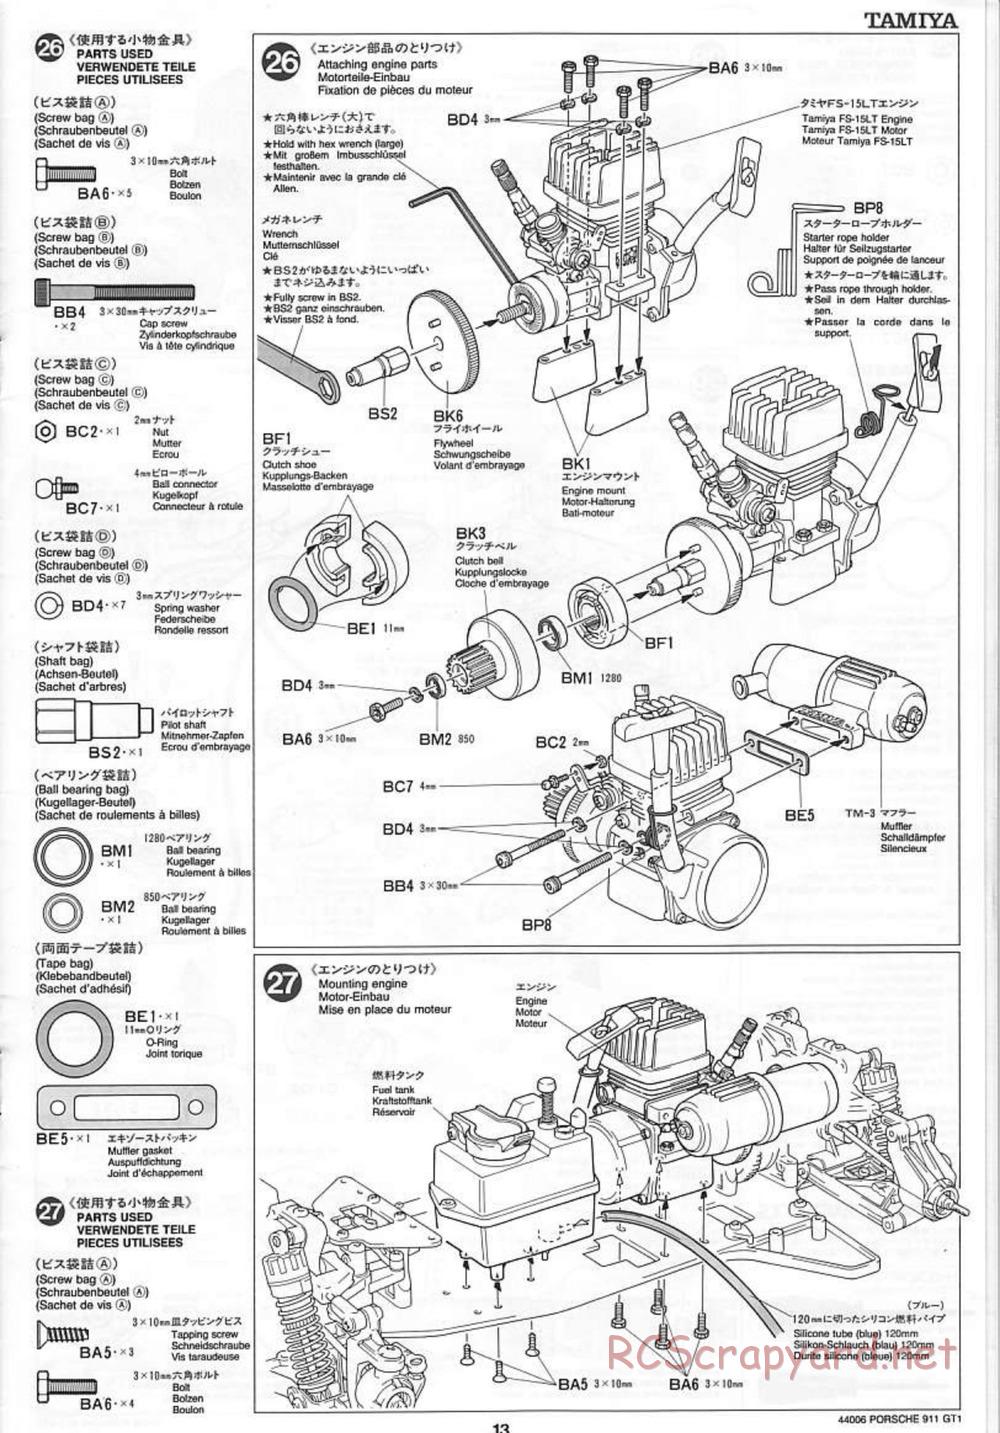 Tamiya - Porsche 911 GT1 - TGX Mk.1 Chassis - Manual - Page 13